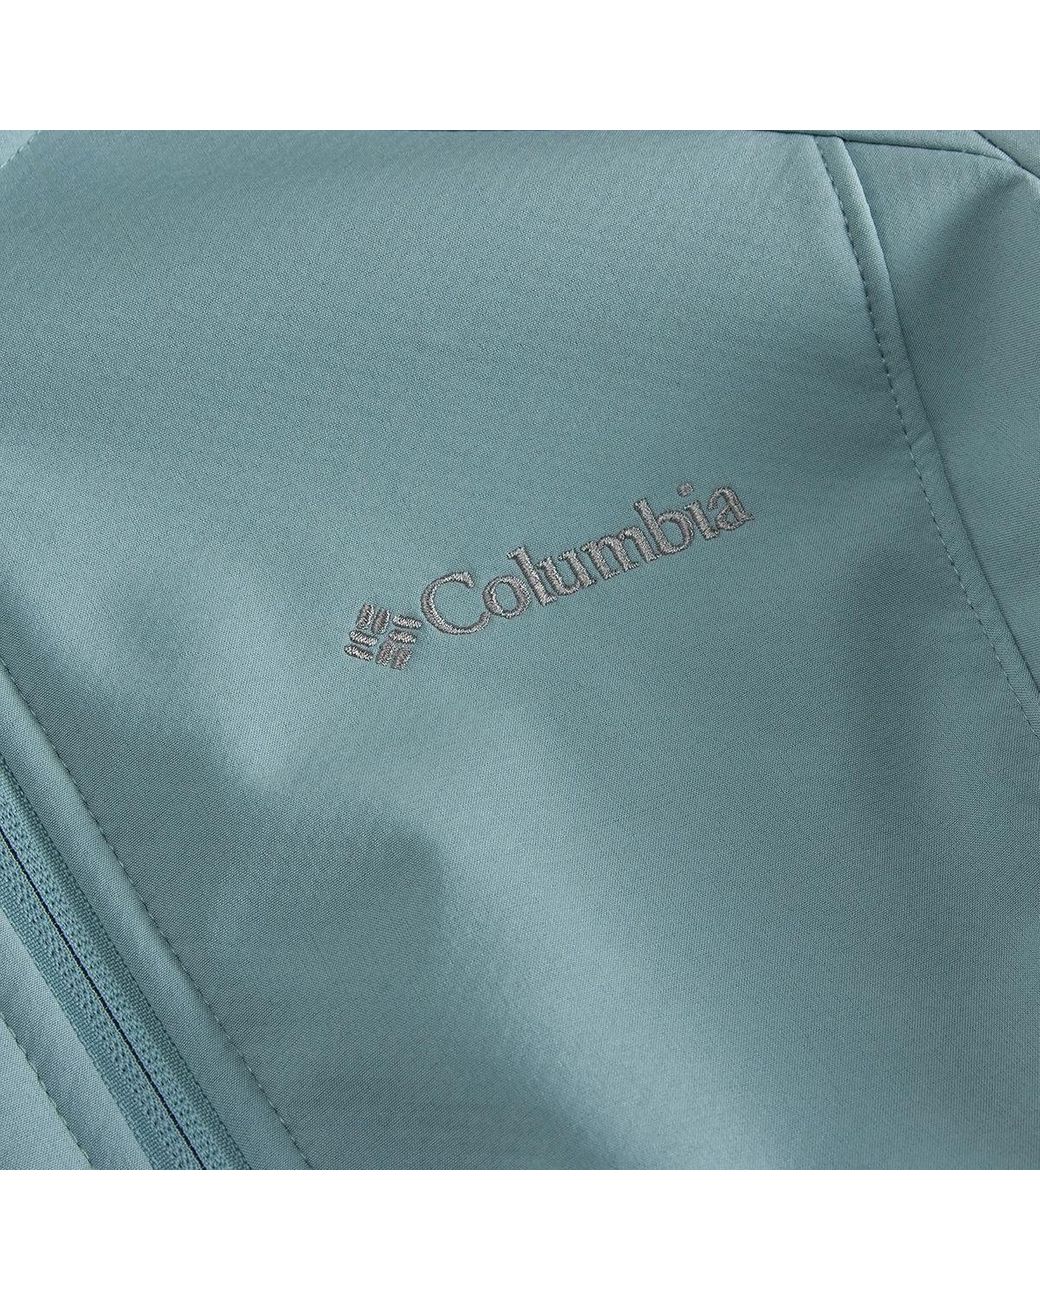 Columbia Alpine Fir Softshell Jacket in Blue | Lyst